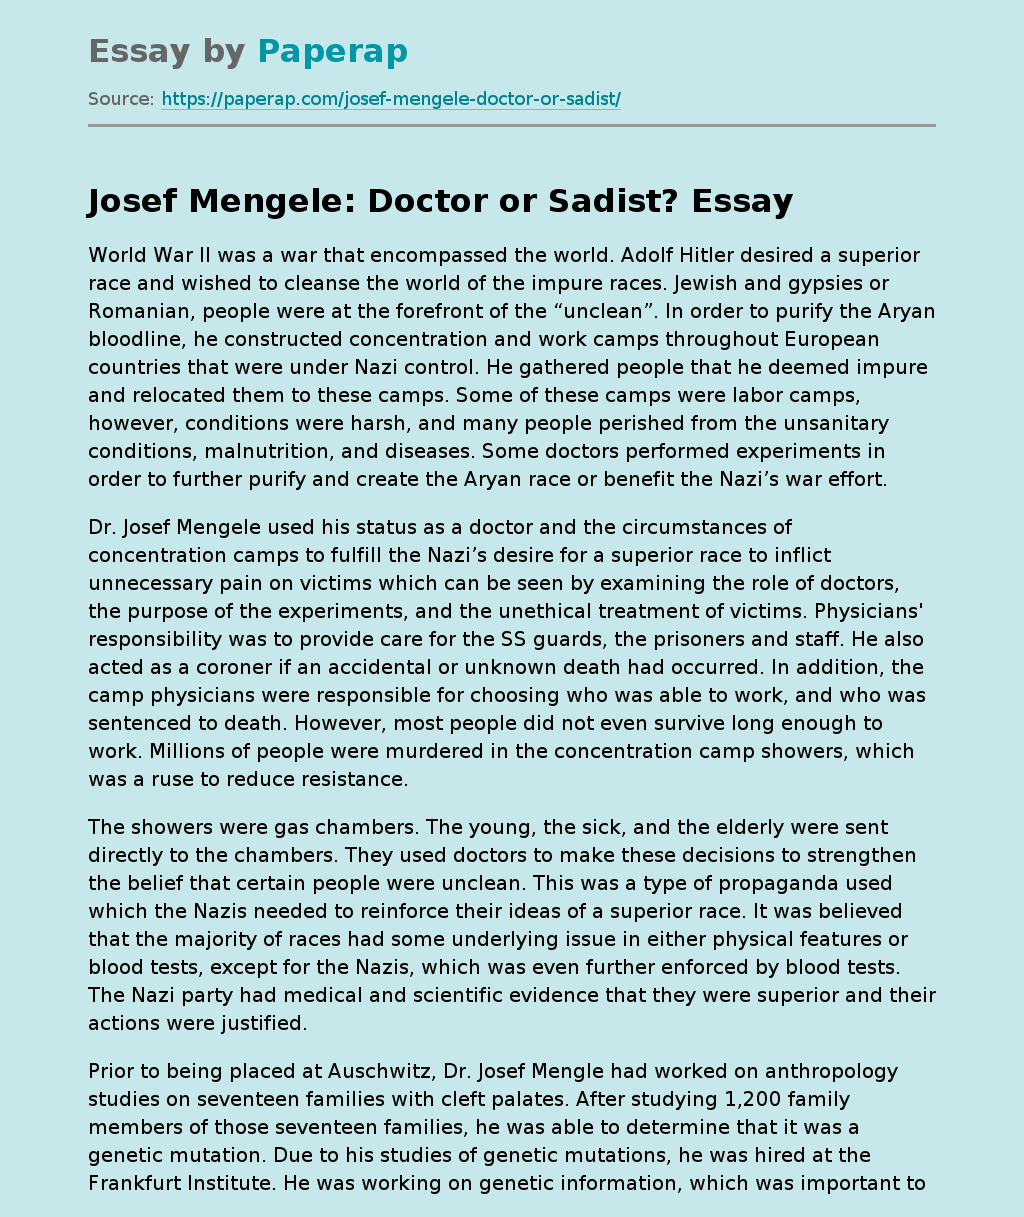 Josef Mengele: Doctor or Sadist?